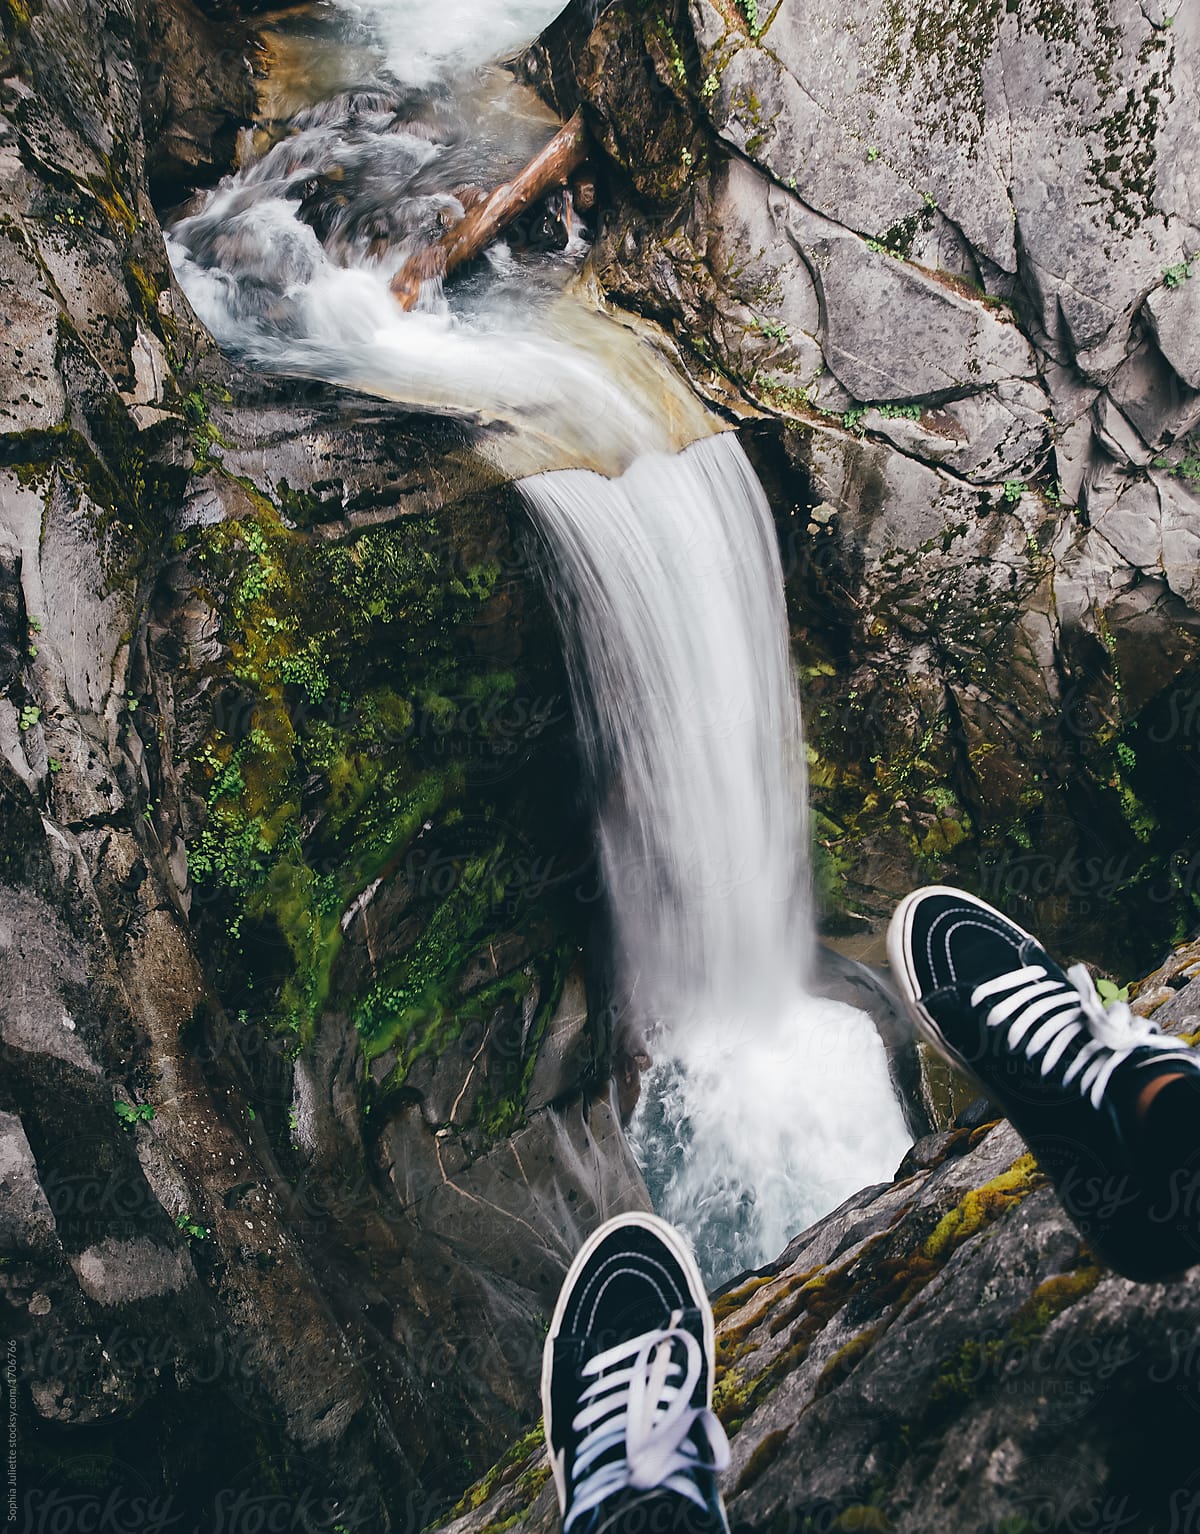 Feet Dangling Above the Daring Drop of a Vigorous Waterfall